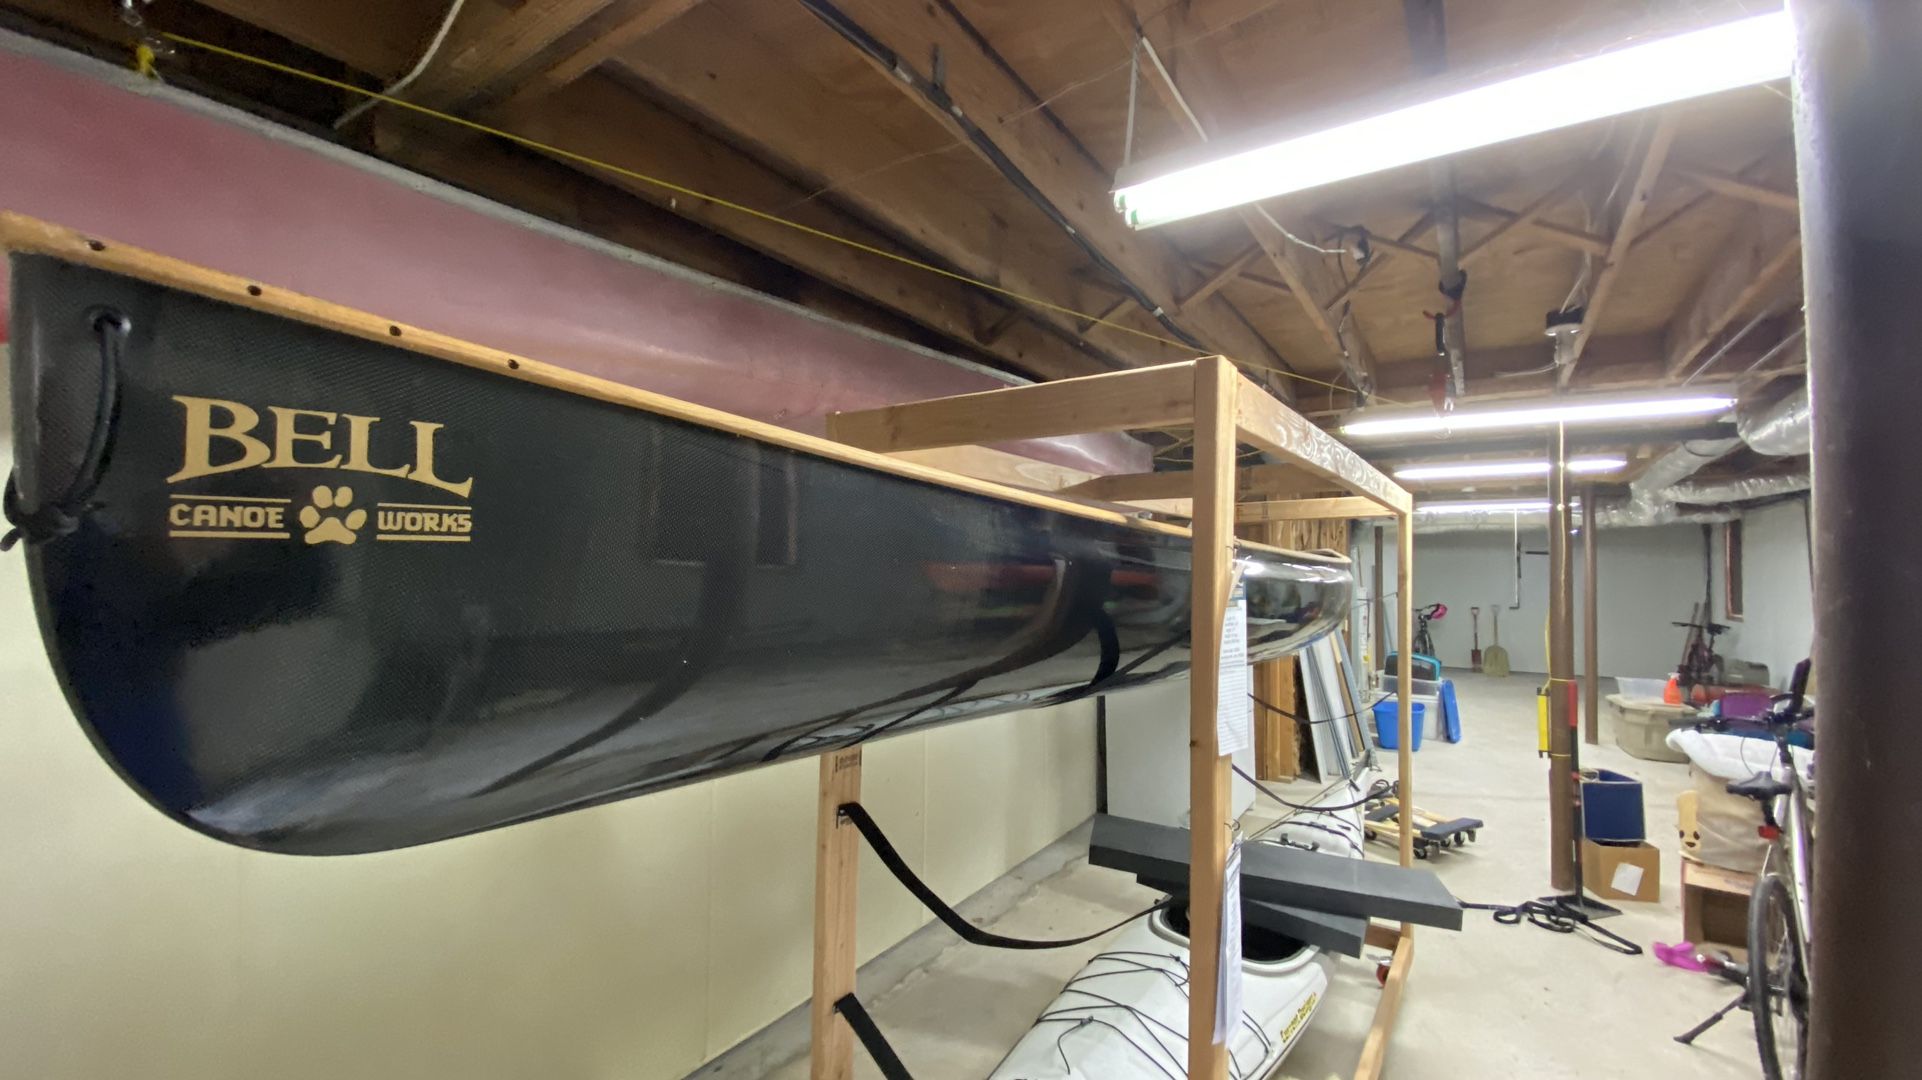 Bell Canoe Works, Merlin II, 33 lb Carbon Fiber Solo Canoe